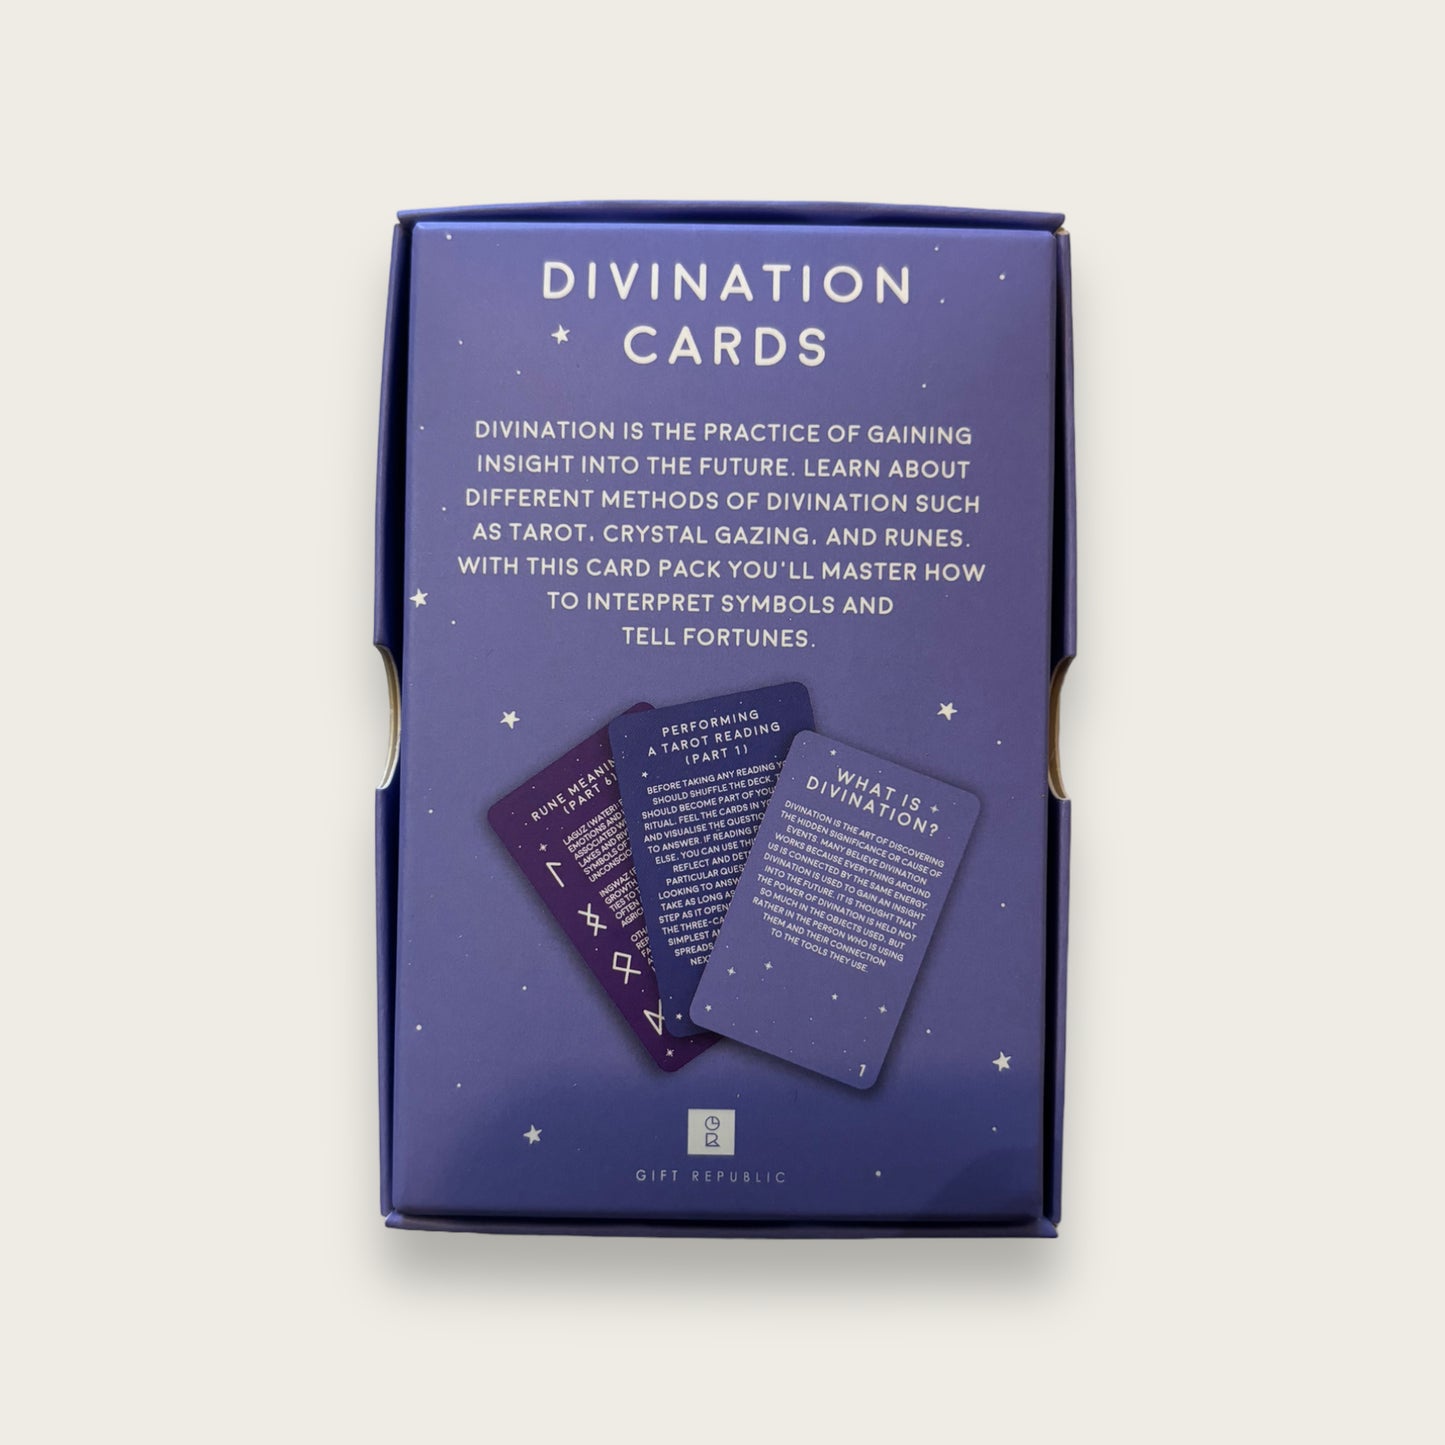 Divanation Cards